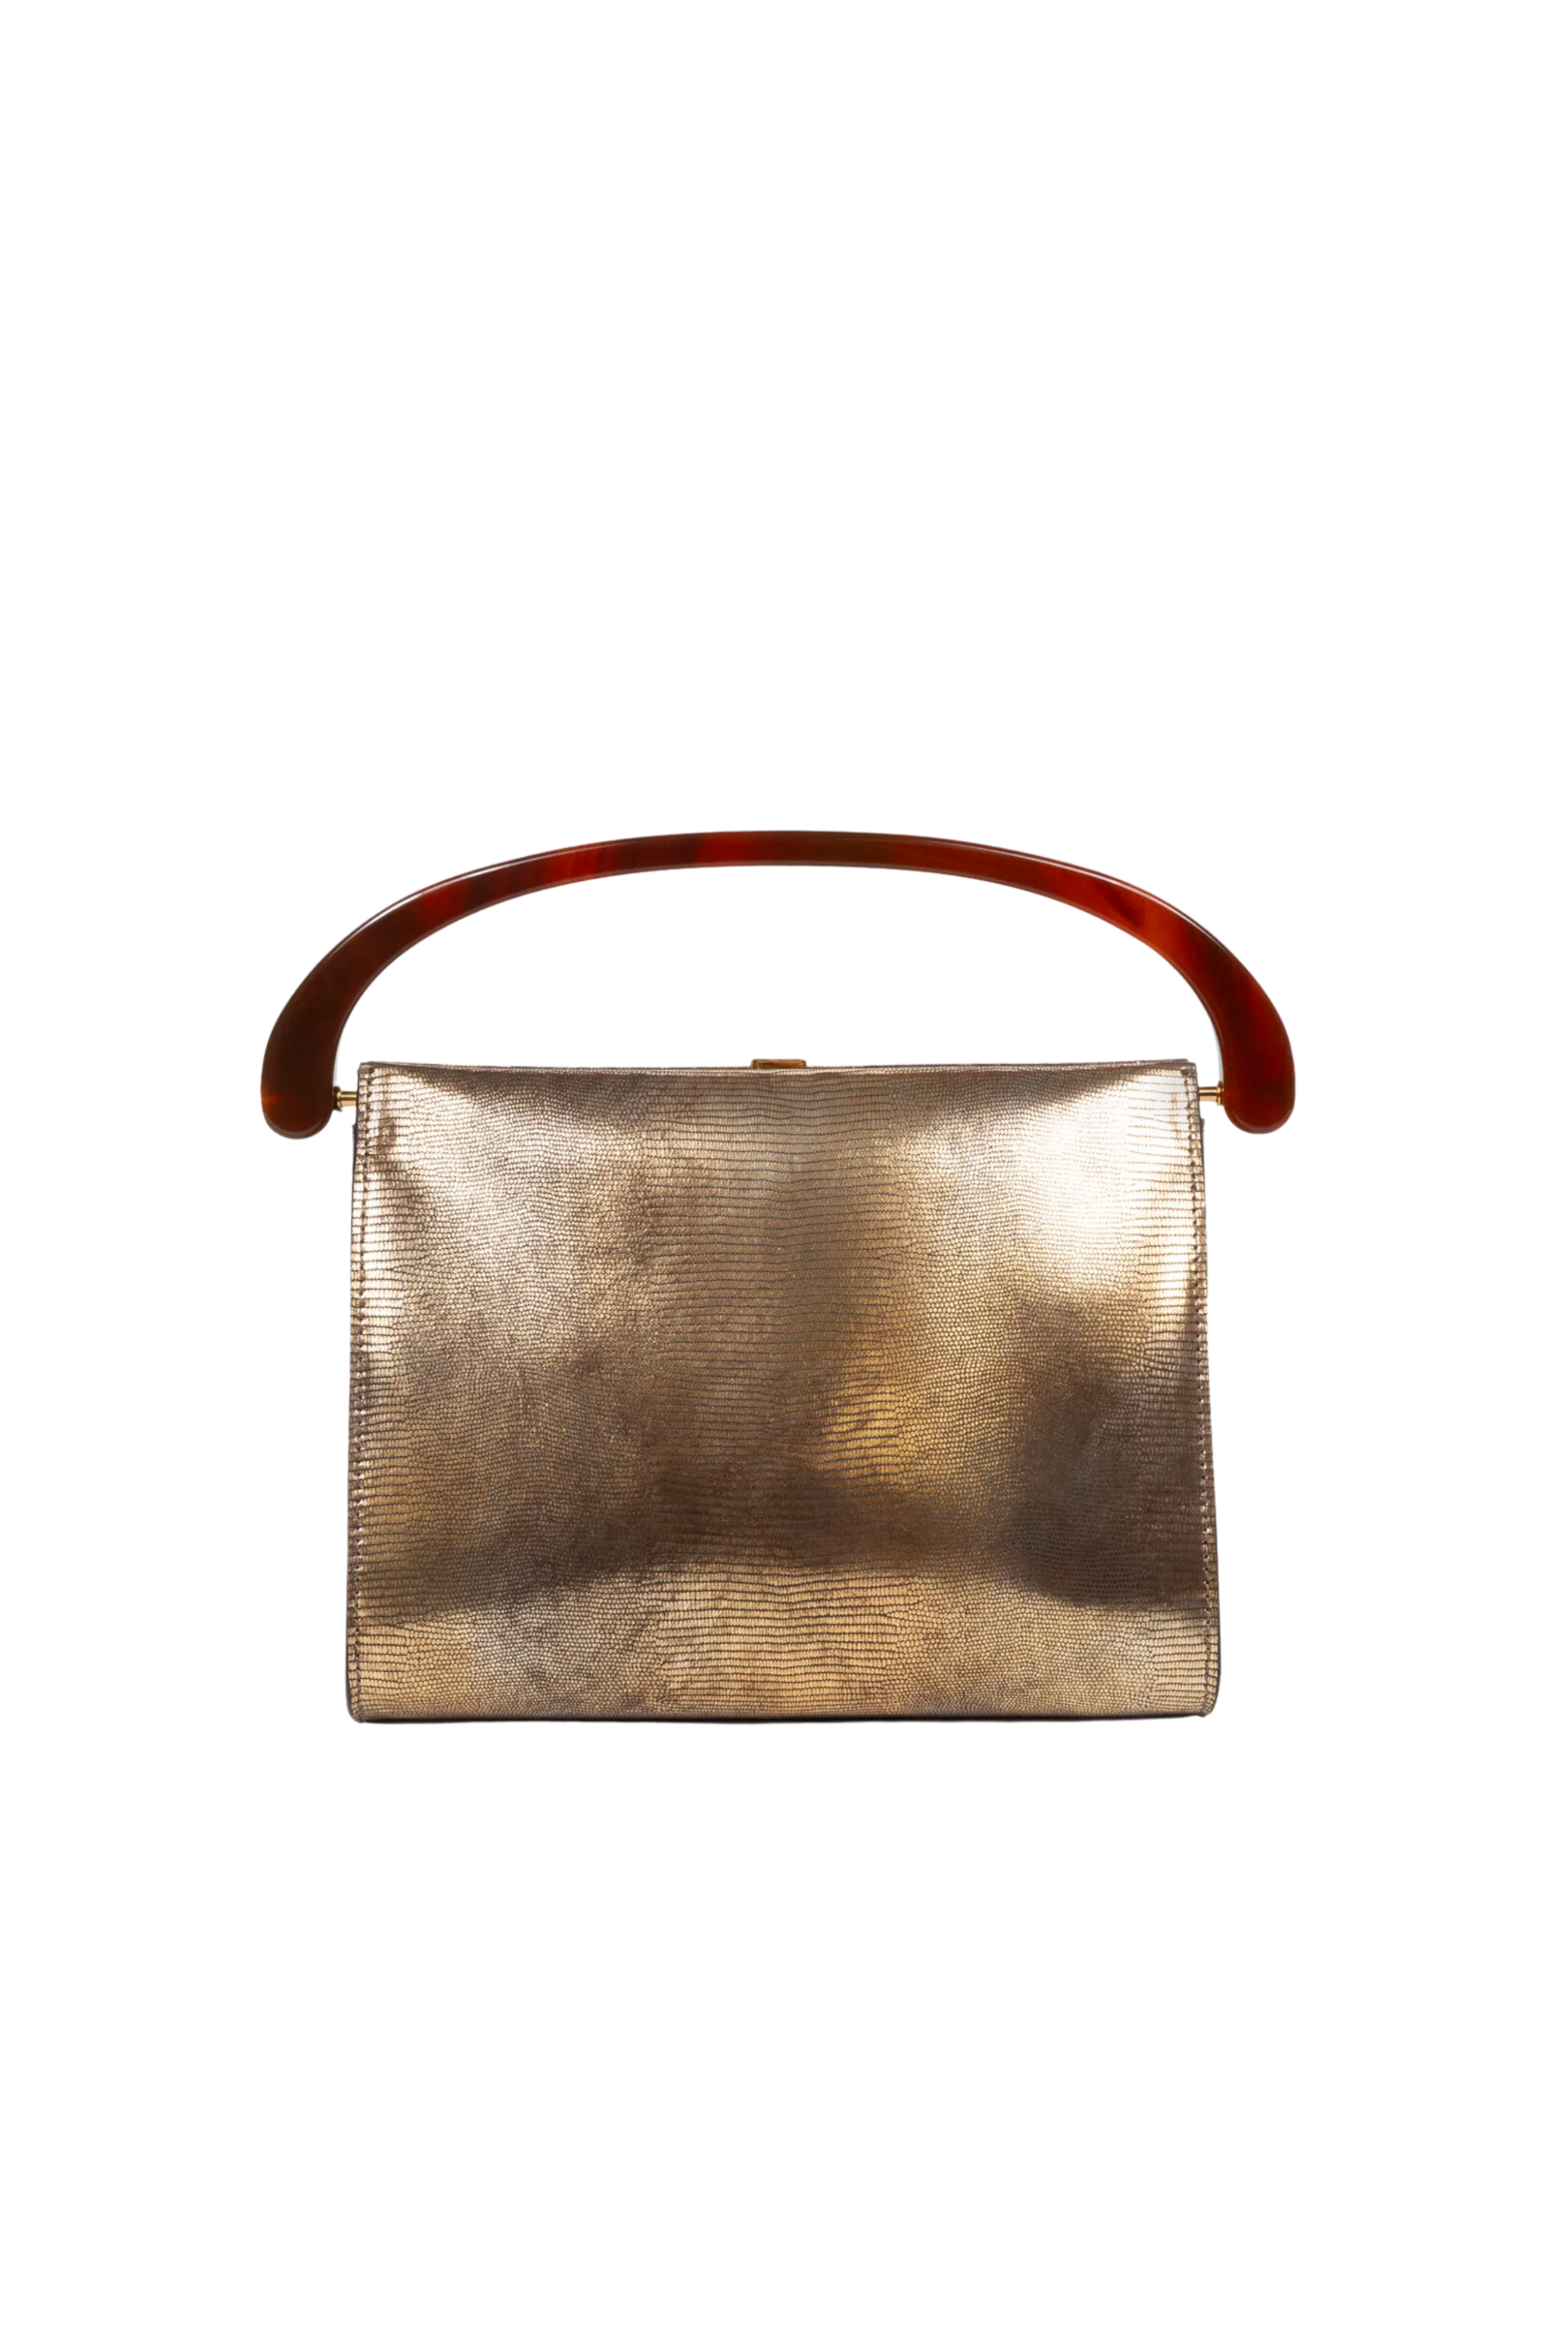 DRIES VAN NOTEN Shiny Leather Bag with Handle